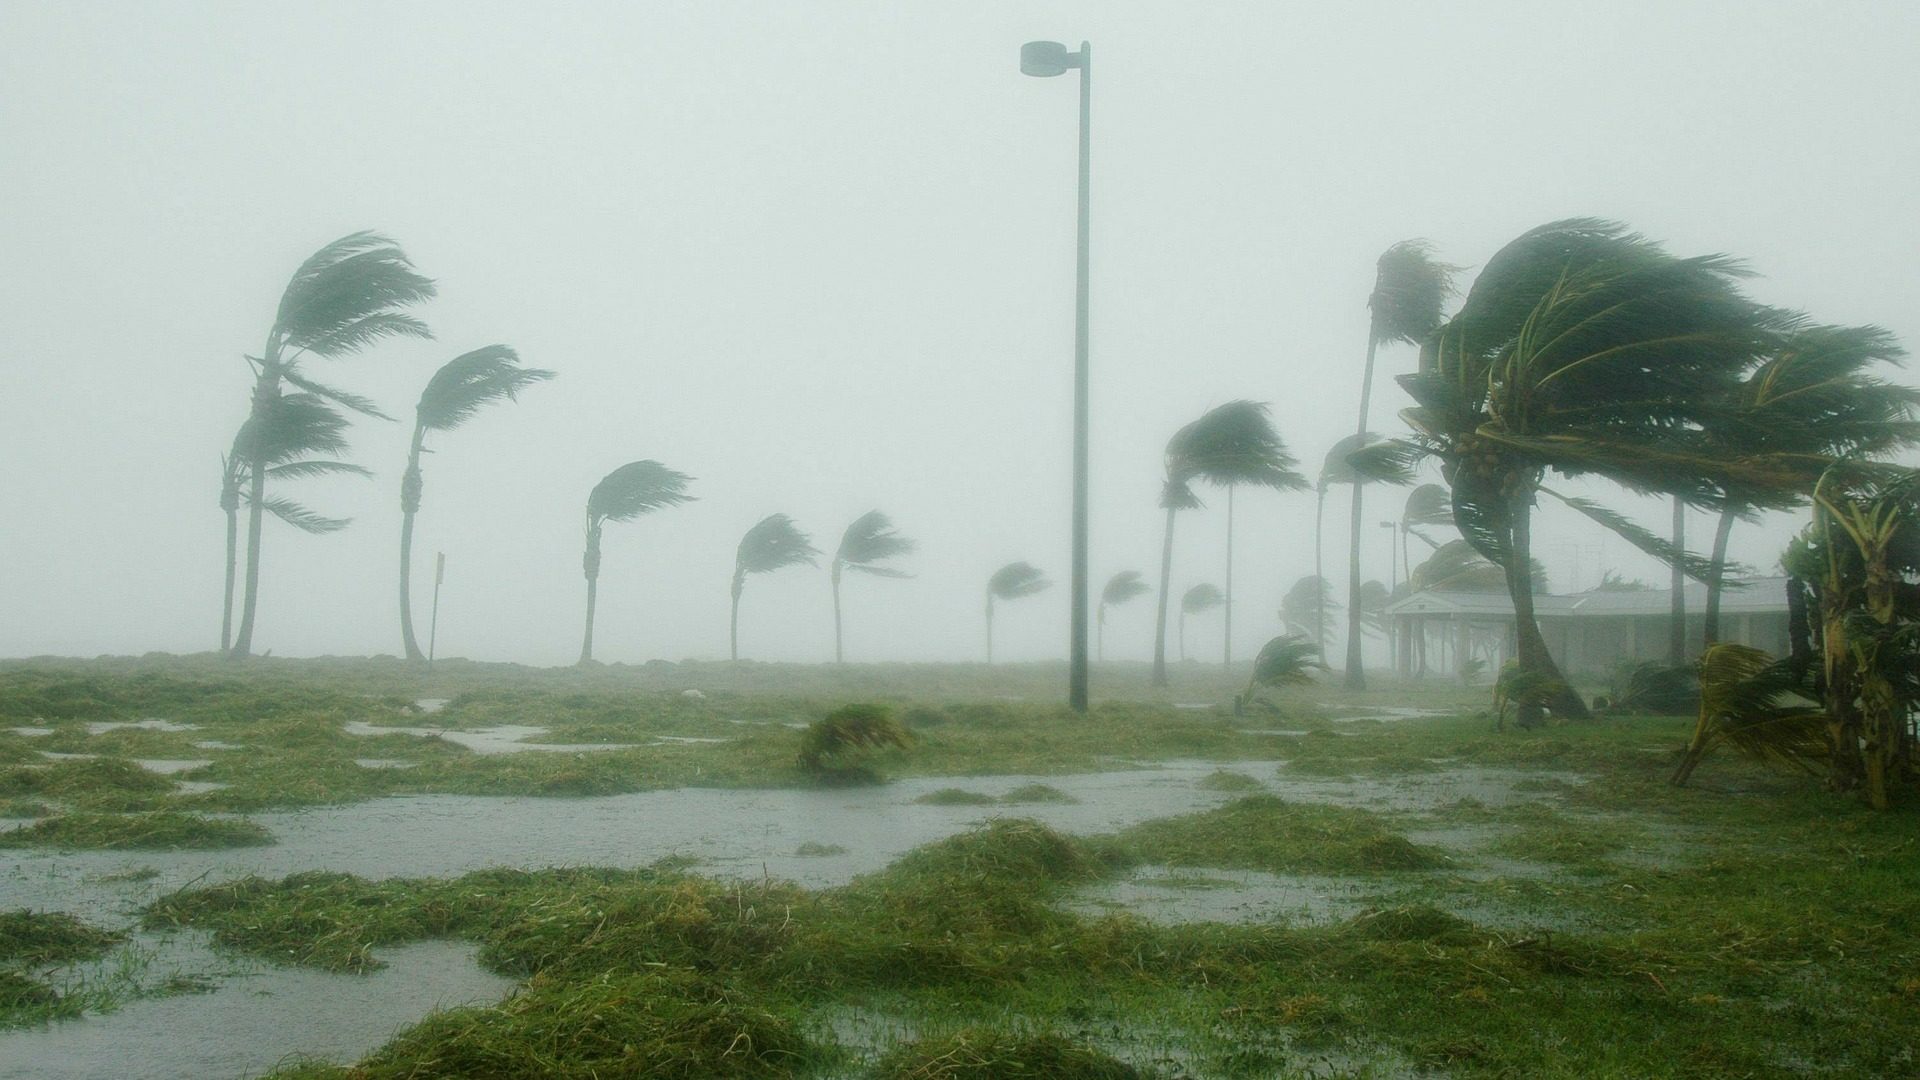 L'ouragan Matthew a dévasté les Caraïbes (Photo d'illustration:Pixabay.com)